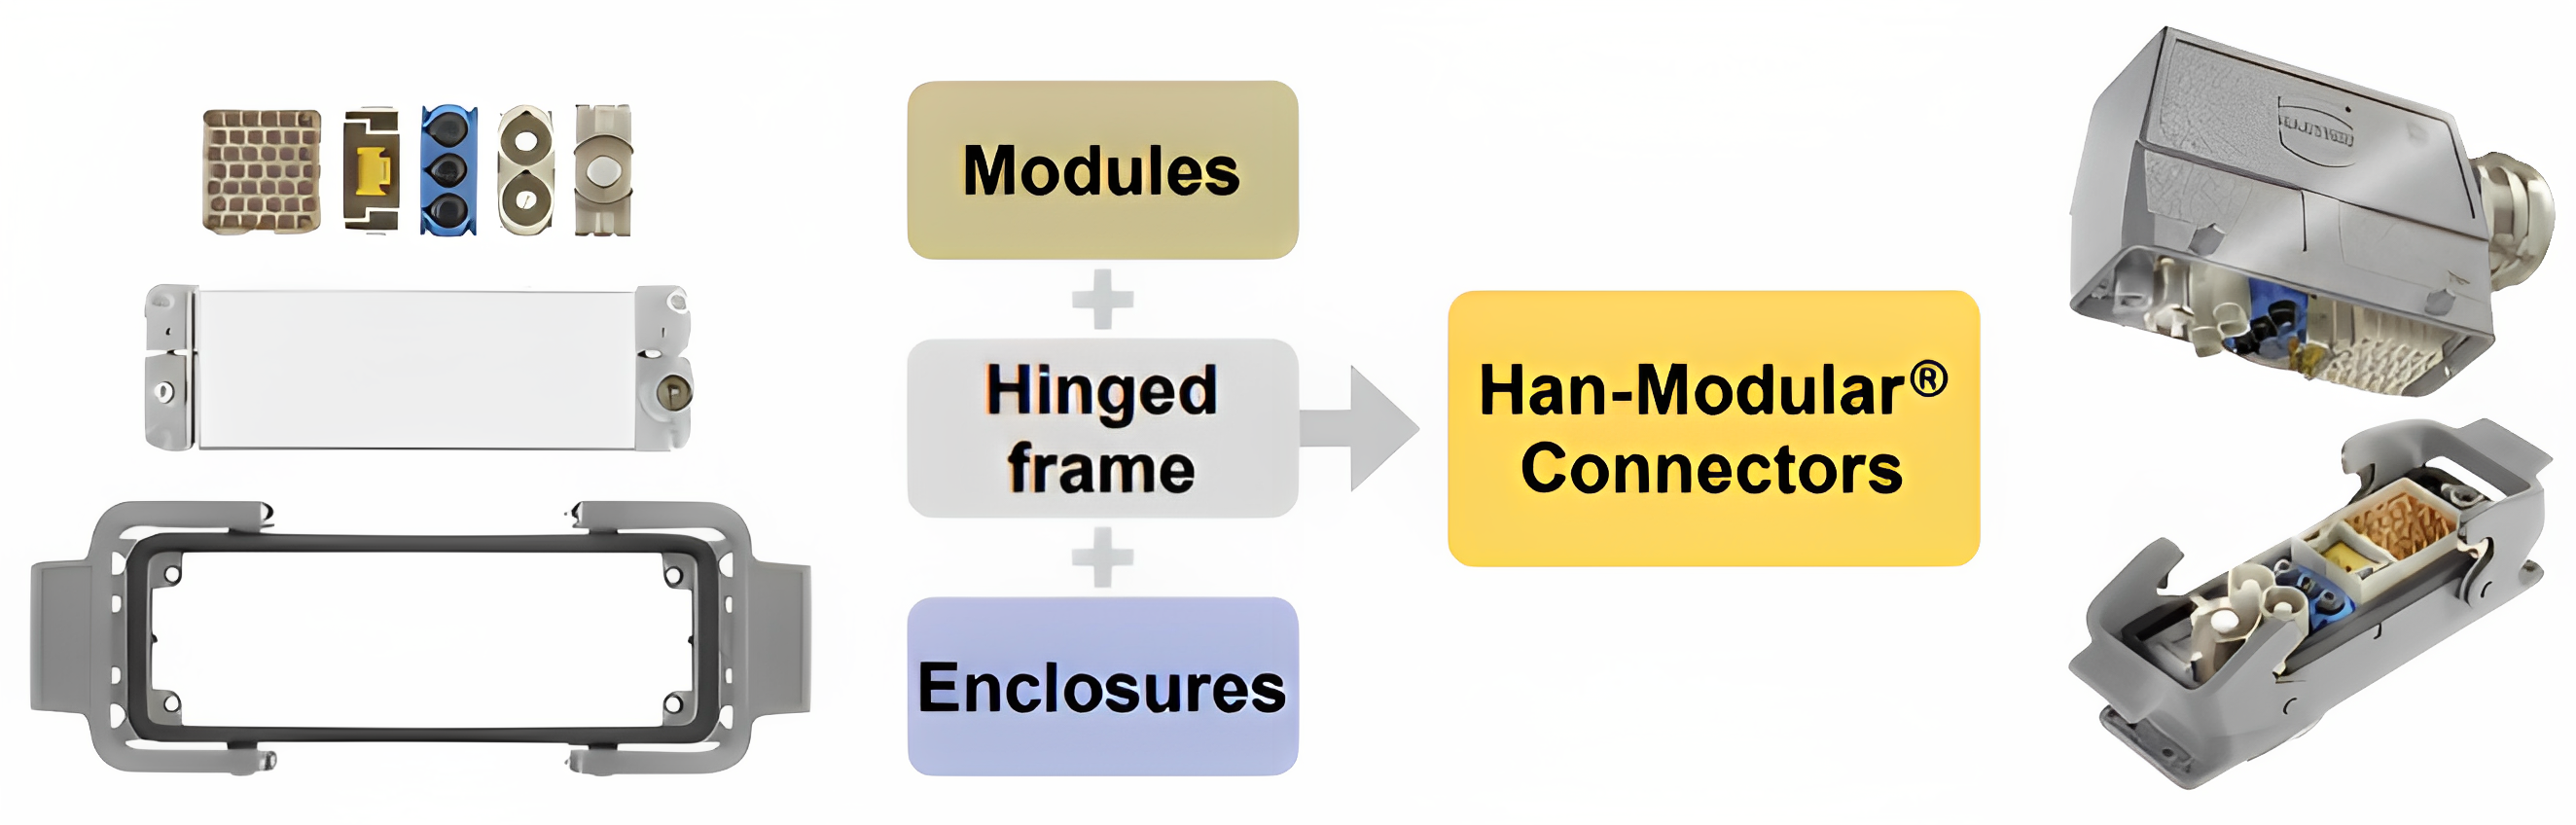 Modular Connectors for Hydrogen Applications (Han-Modular®)_6